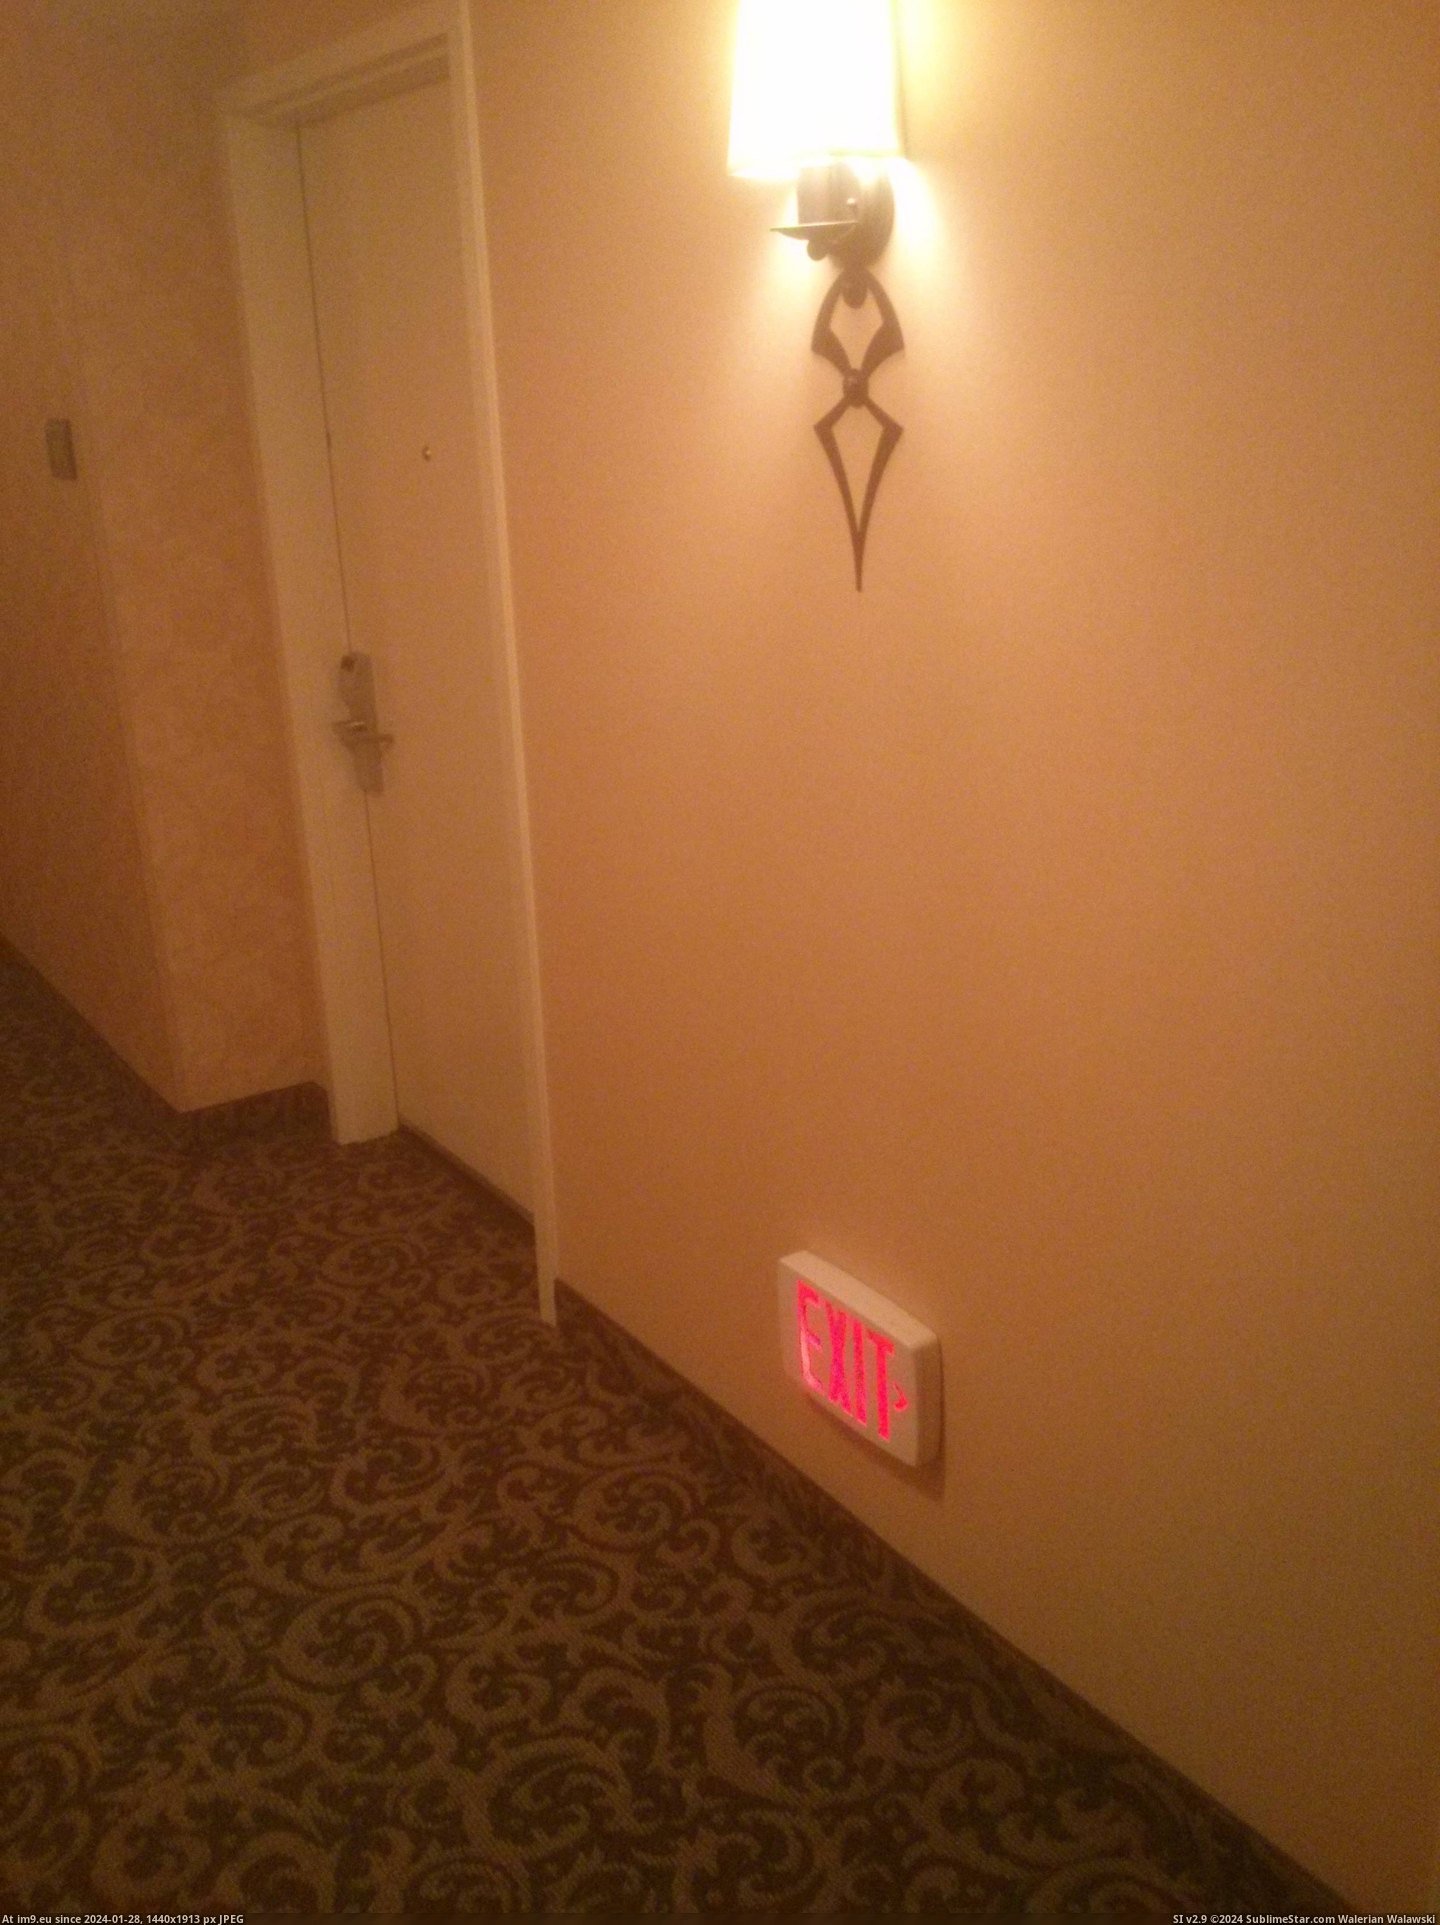 #Hotel #Hallway #Exit #Floor [Mildlyinteresting] Found an exit sign near the floor of a hotel hallway Pic. (Obraz z album My r/MILDLYINTERESTING favs))